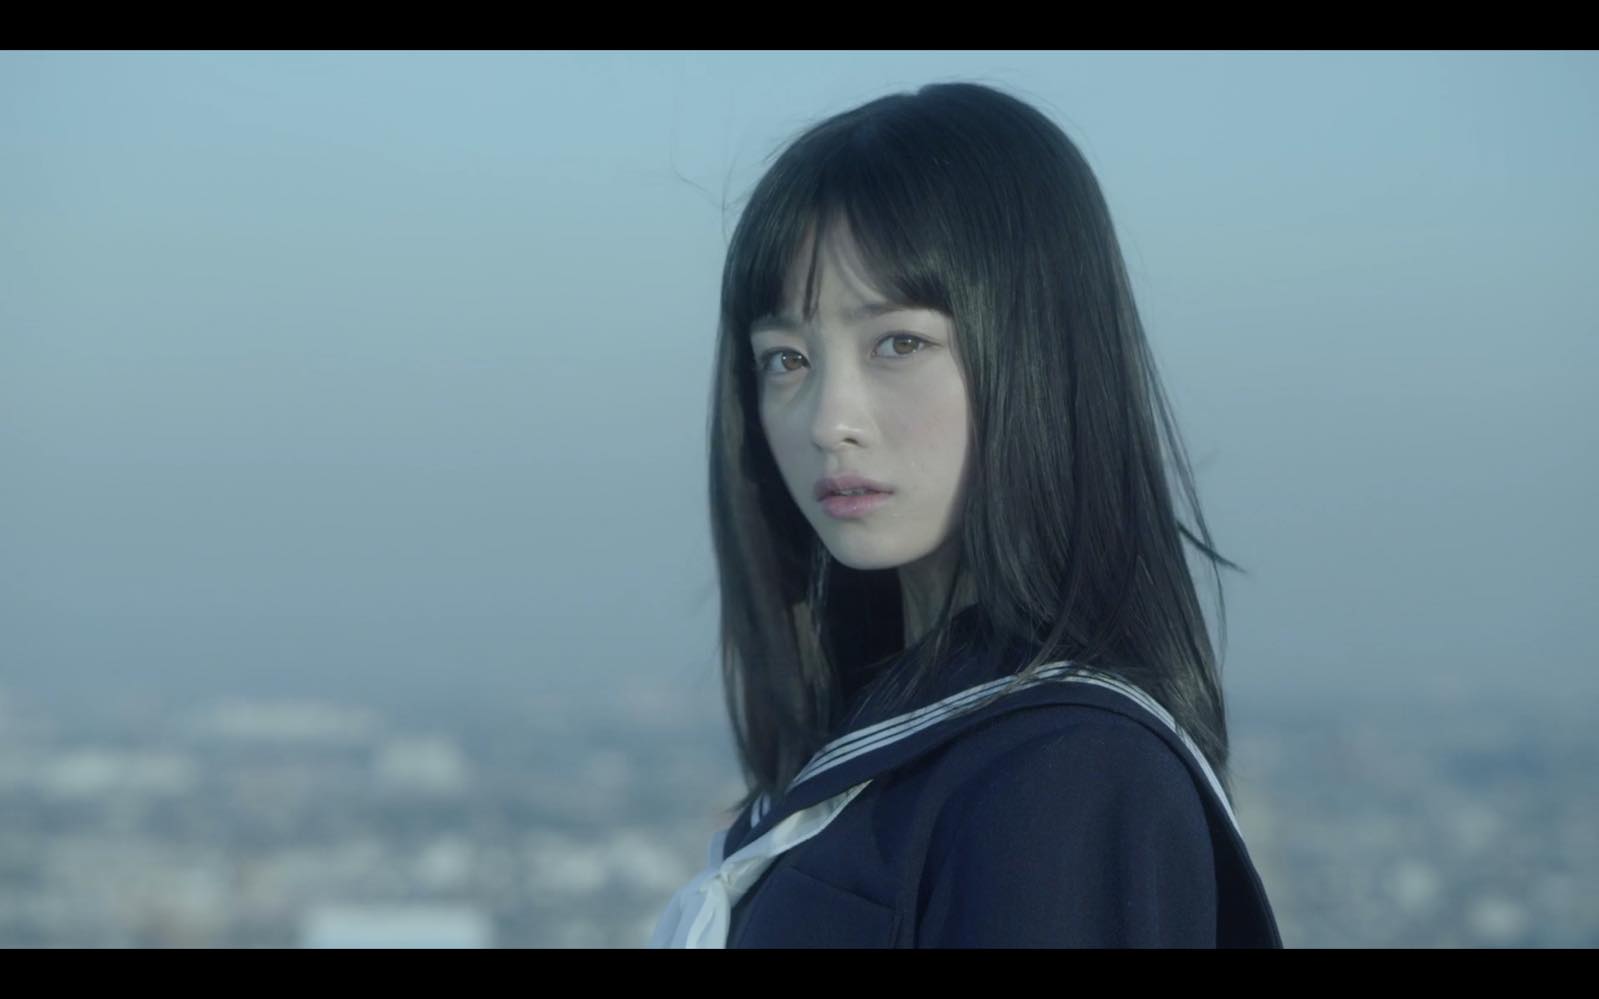 Kanna Hashimoto Sings of Heartbreak in the MV for her Solo Debut Single “Sailorfuku to Kikanju”!